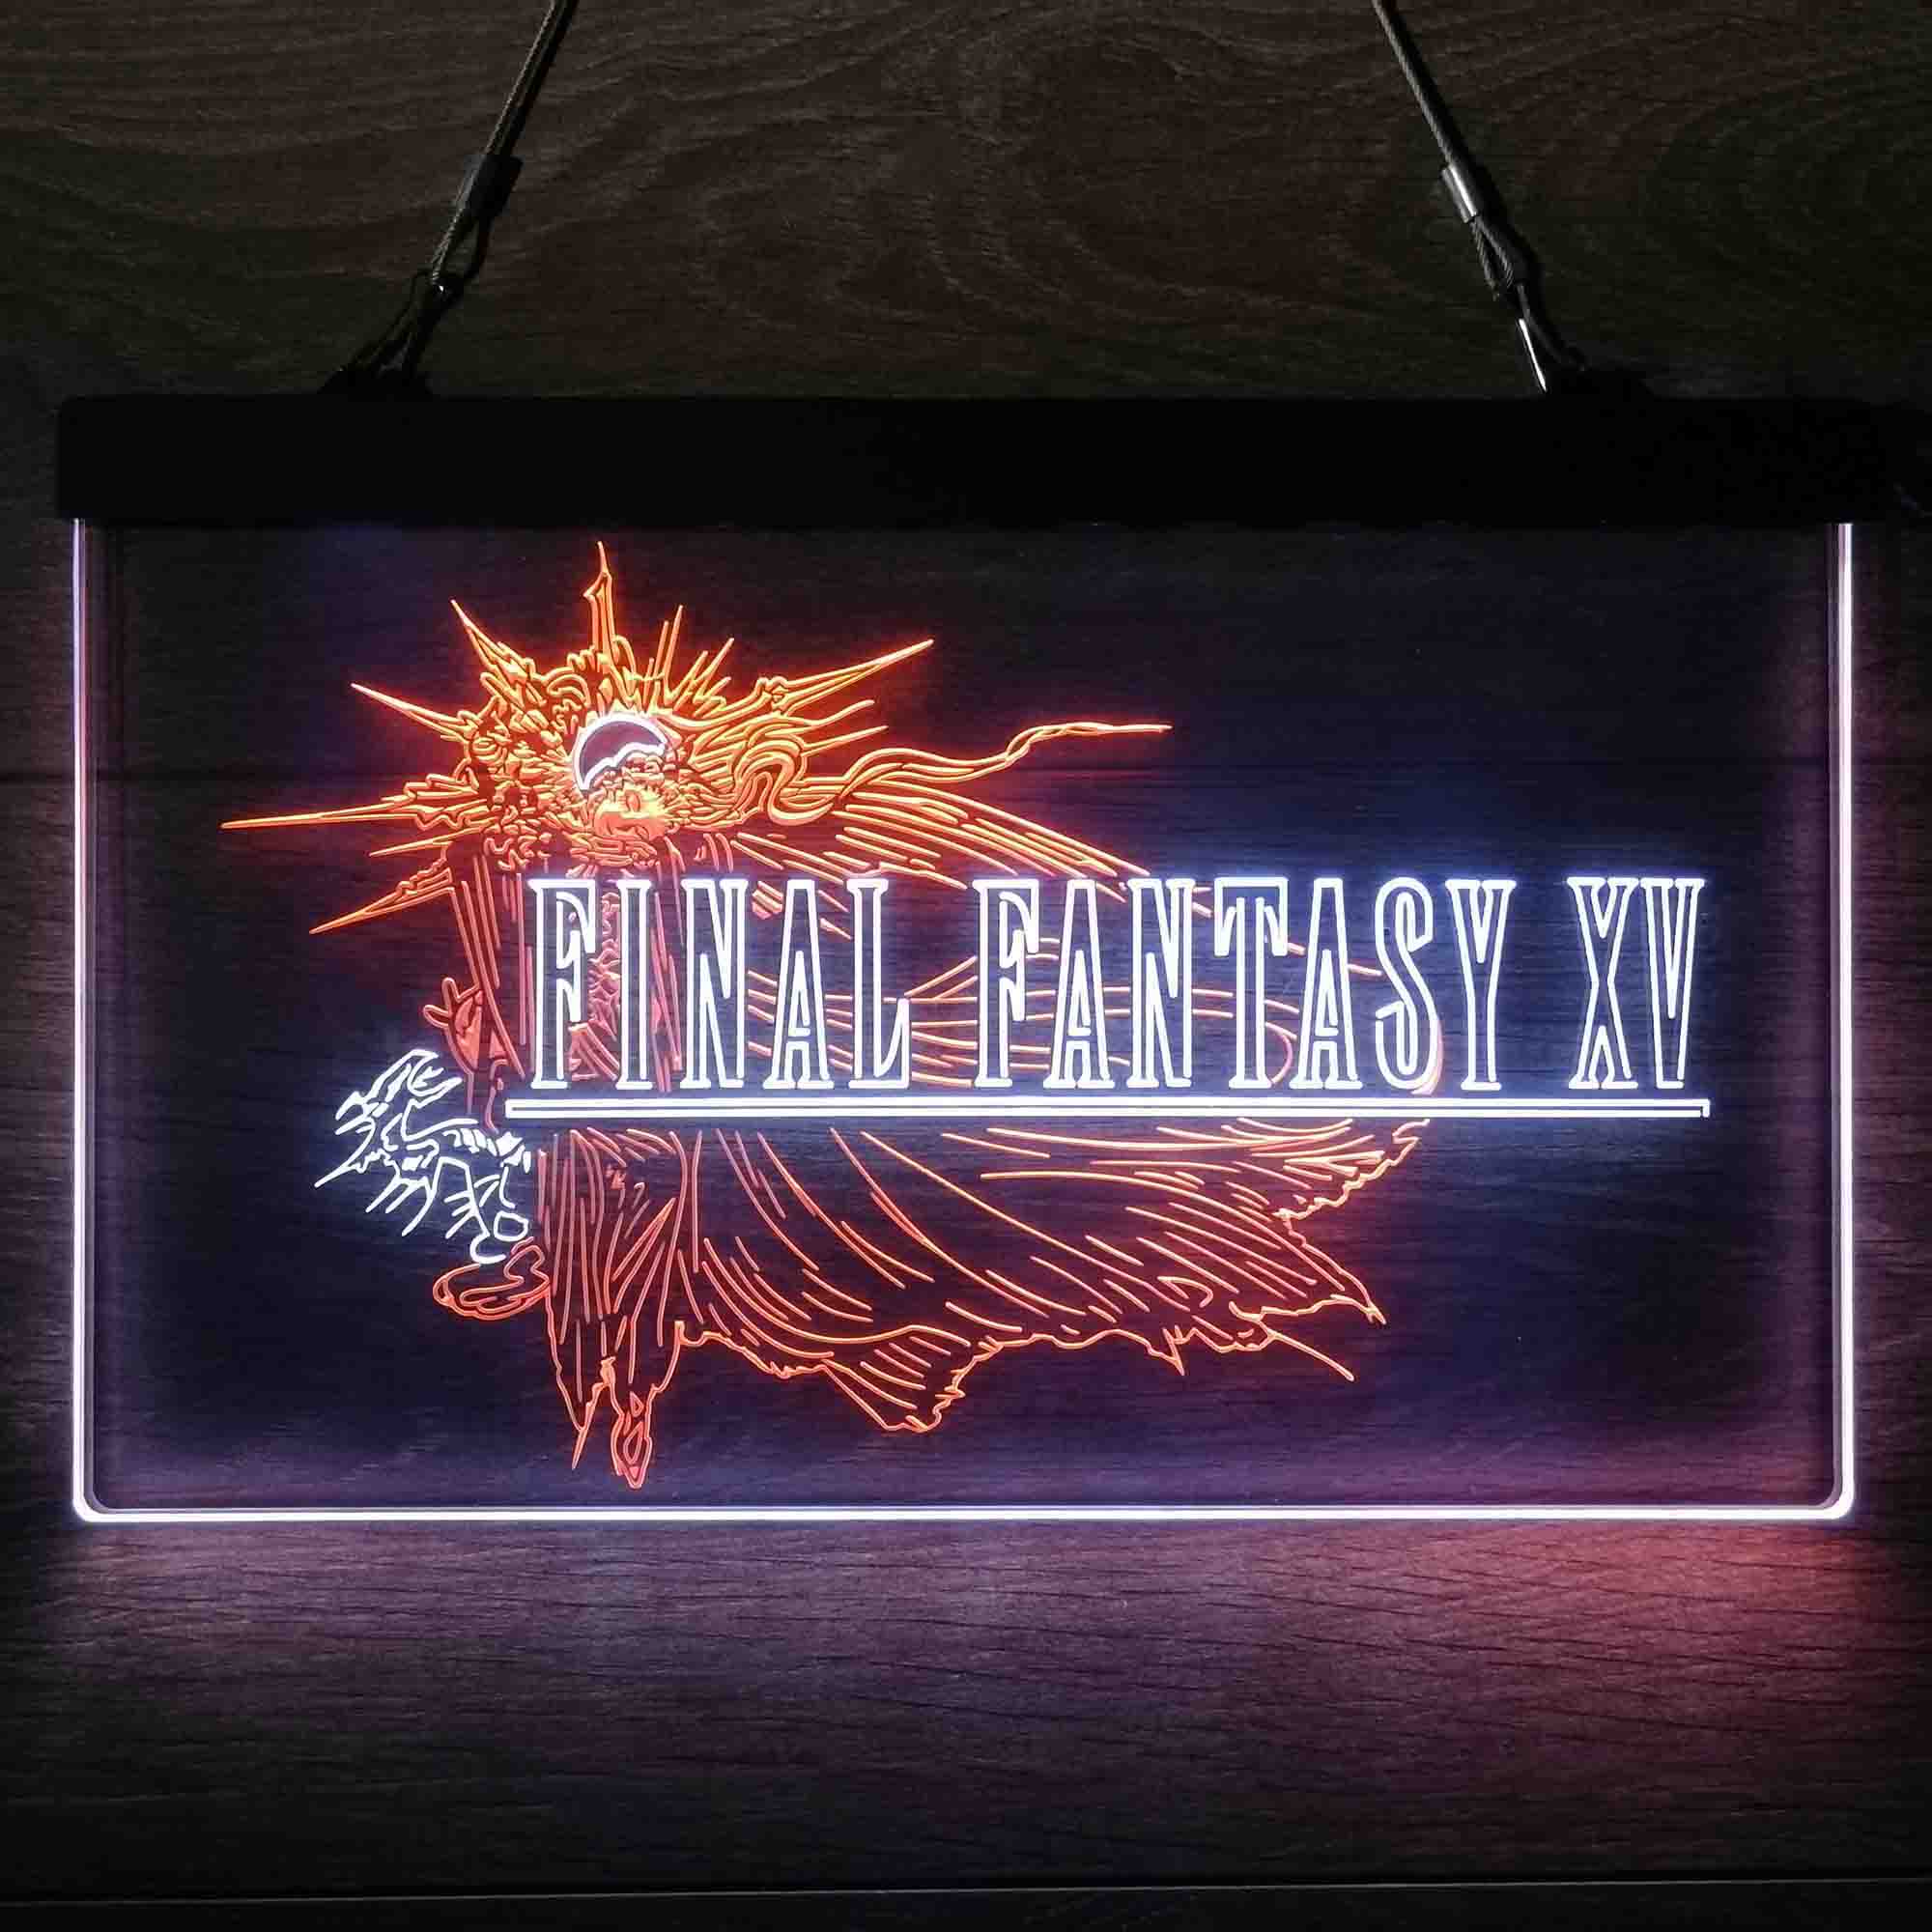 Final Fantasy XV Game Room Neon-Like LED Sign